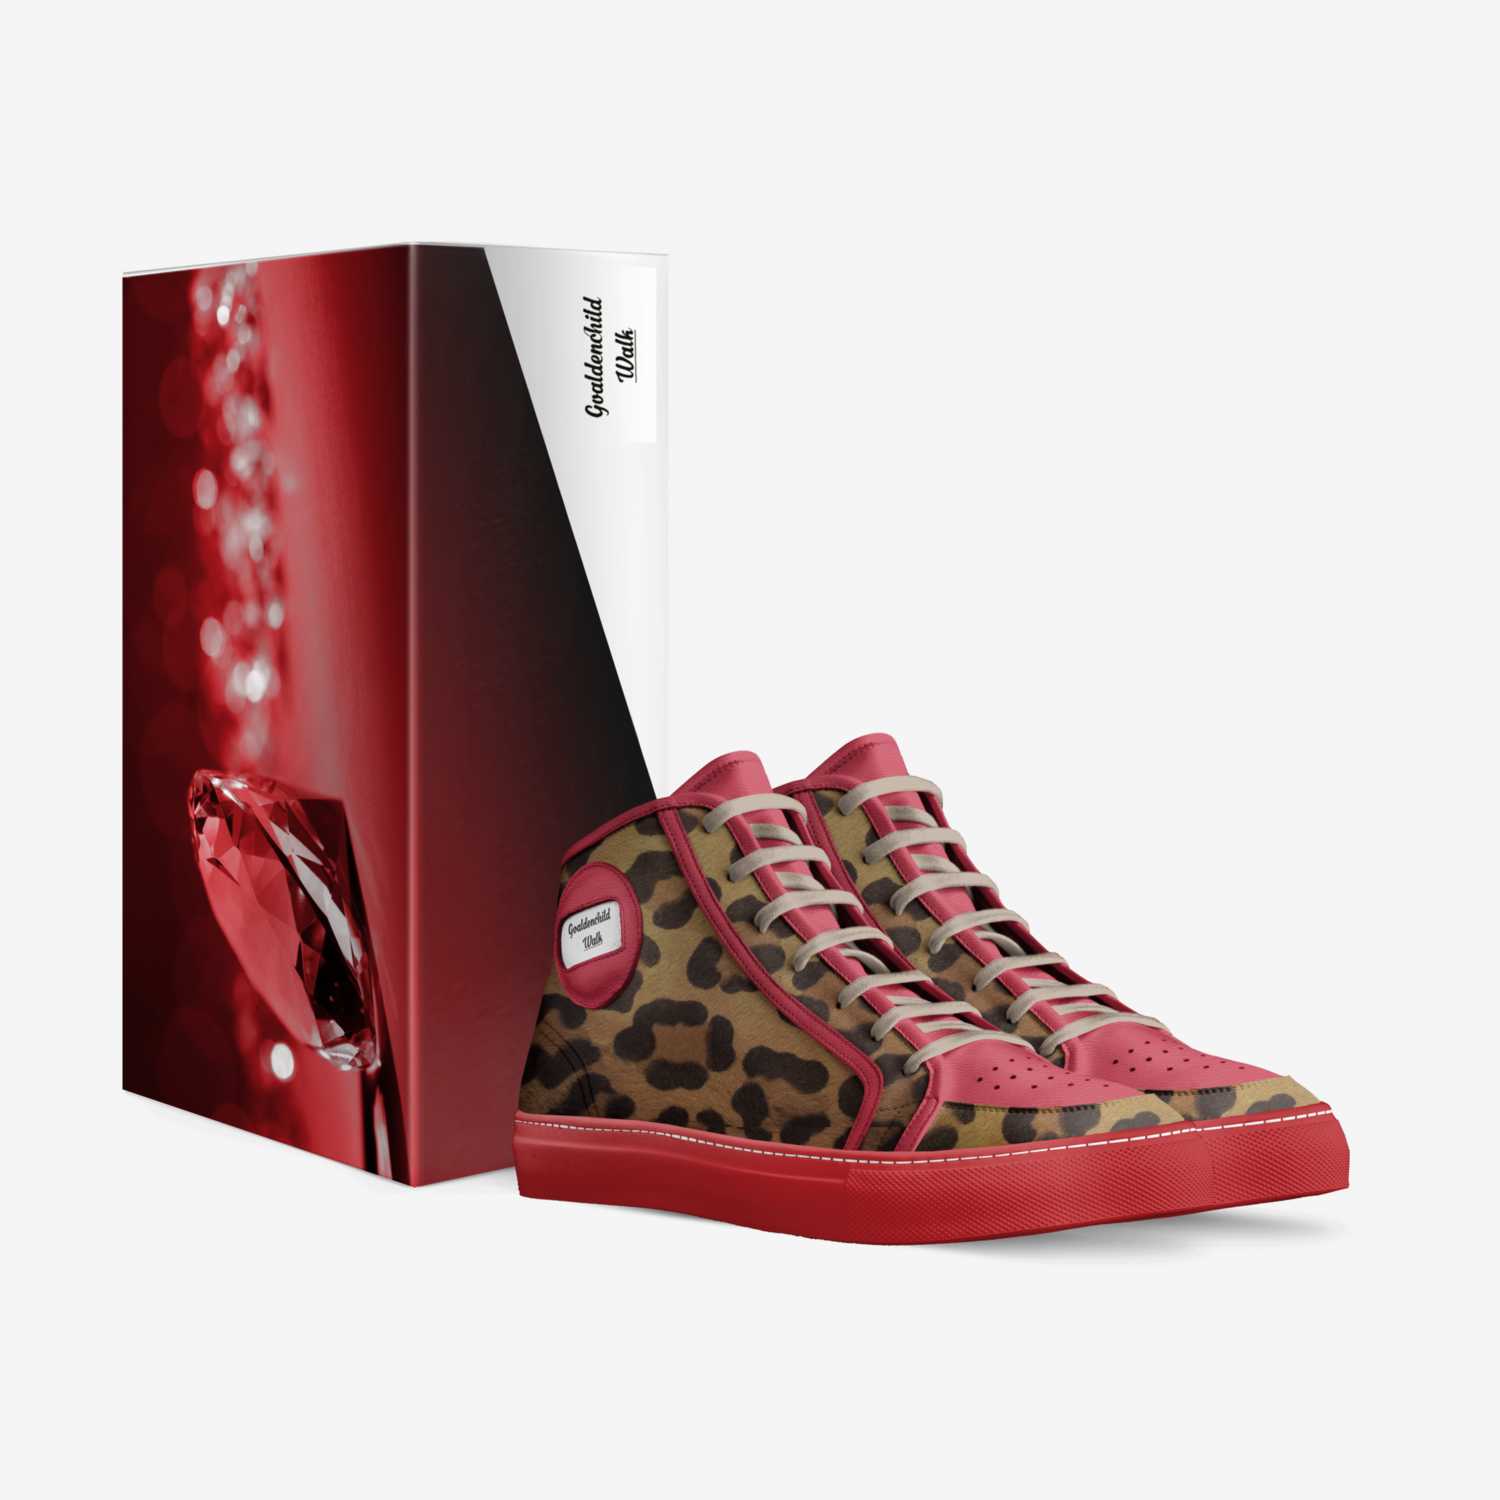 Goaldenchild walk  custom made in Italy shoes by Tamara Hammond | Box view